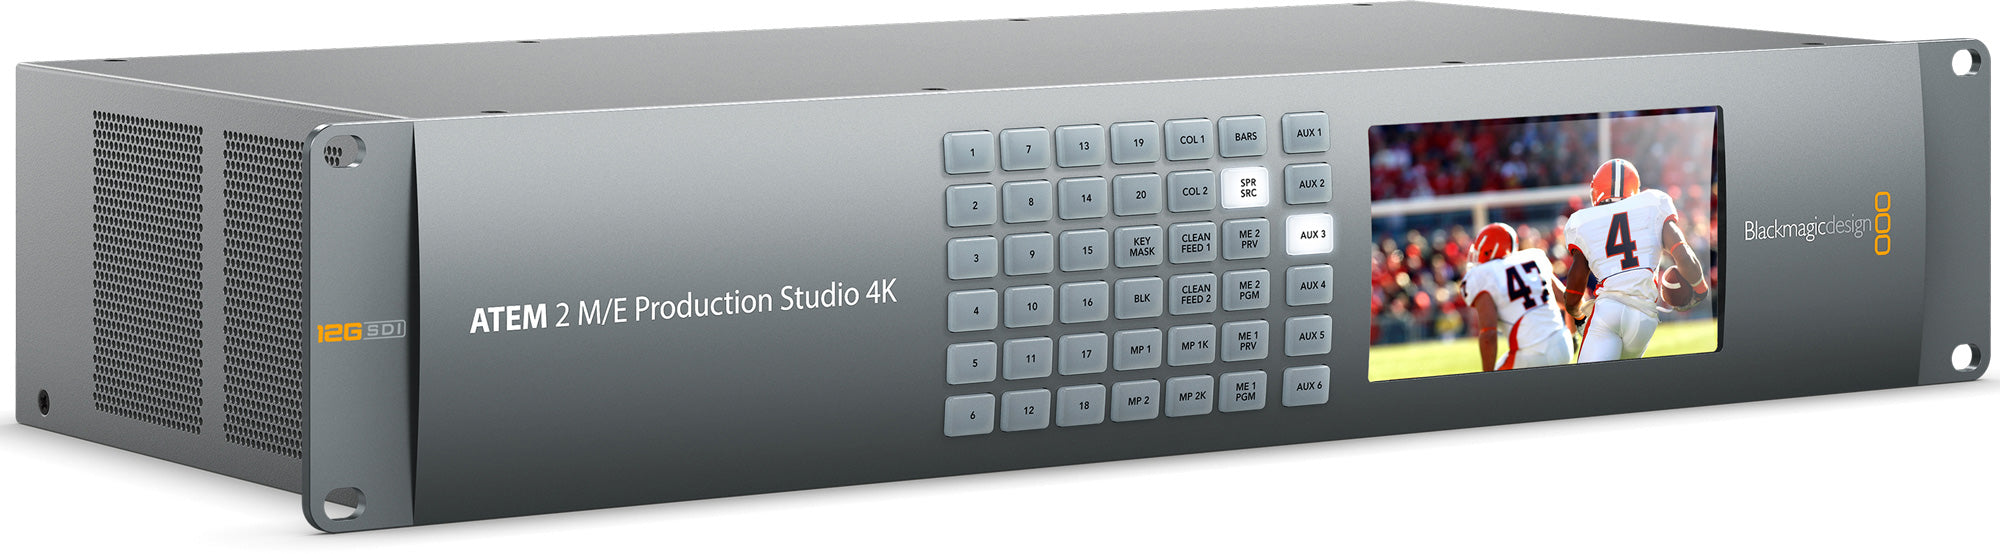 Blackmagic Design ATEM 2 M/E Production Studio 4K 20 Input 6G-SDI Live Production Switcher